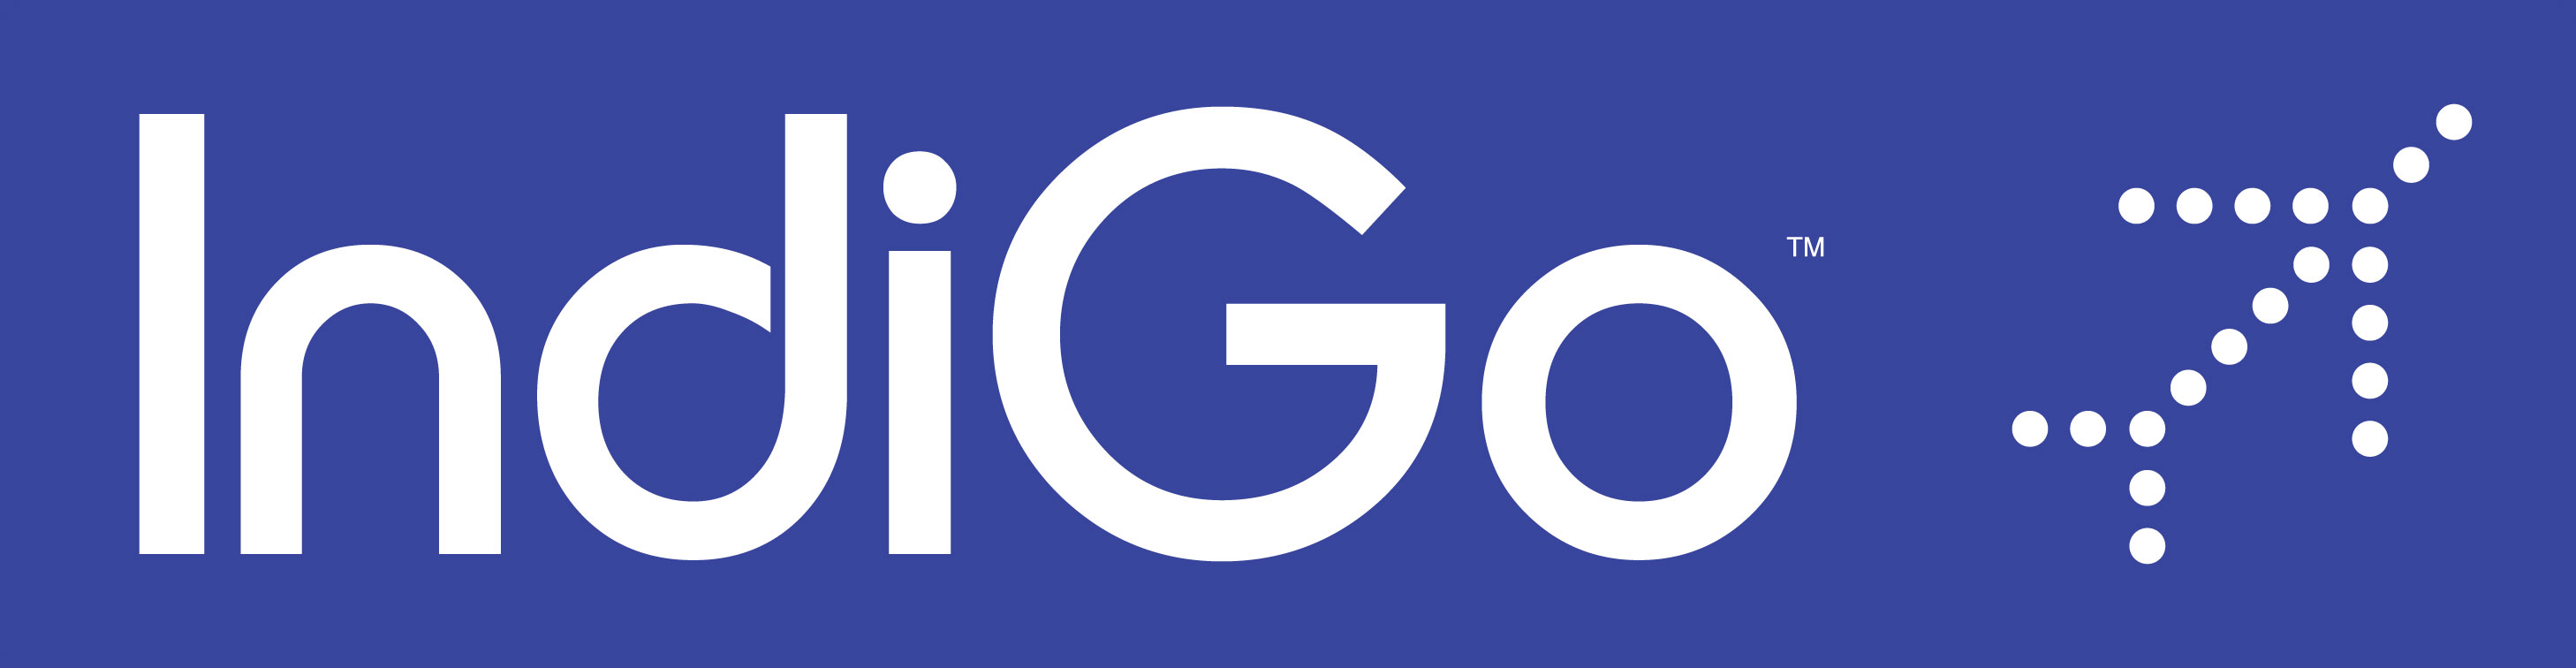 indigo airlines (interglobe) logo